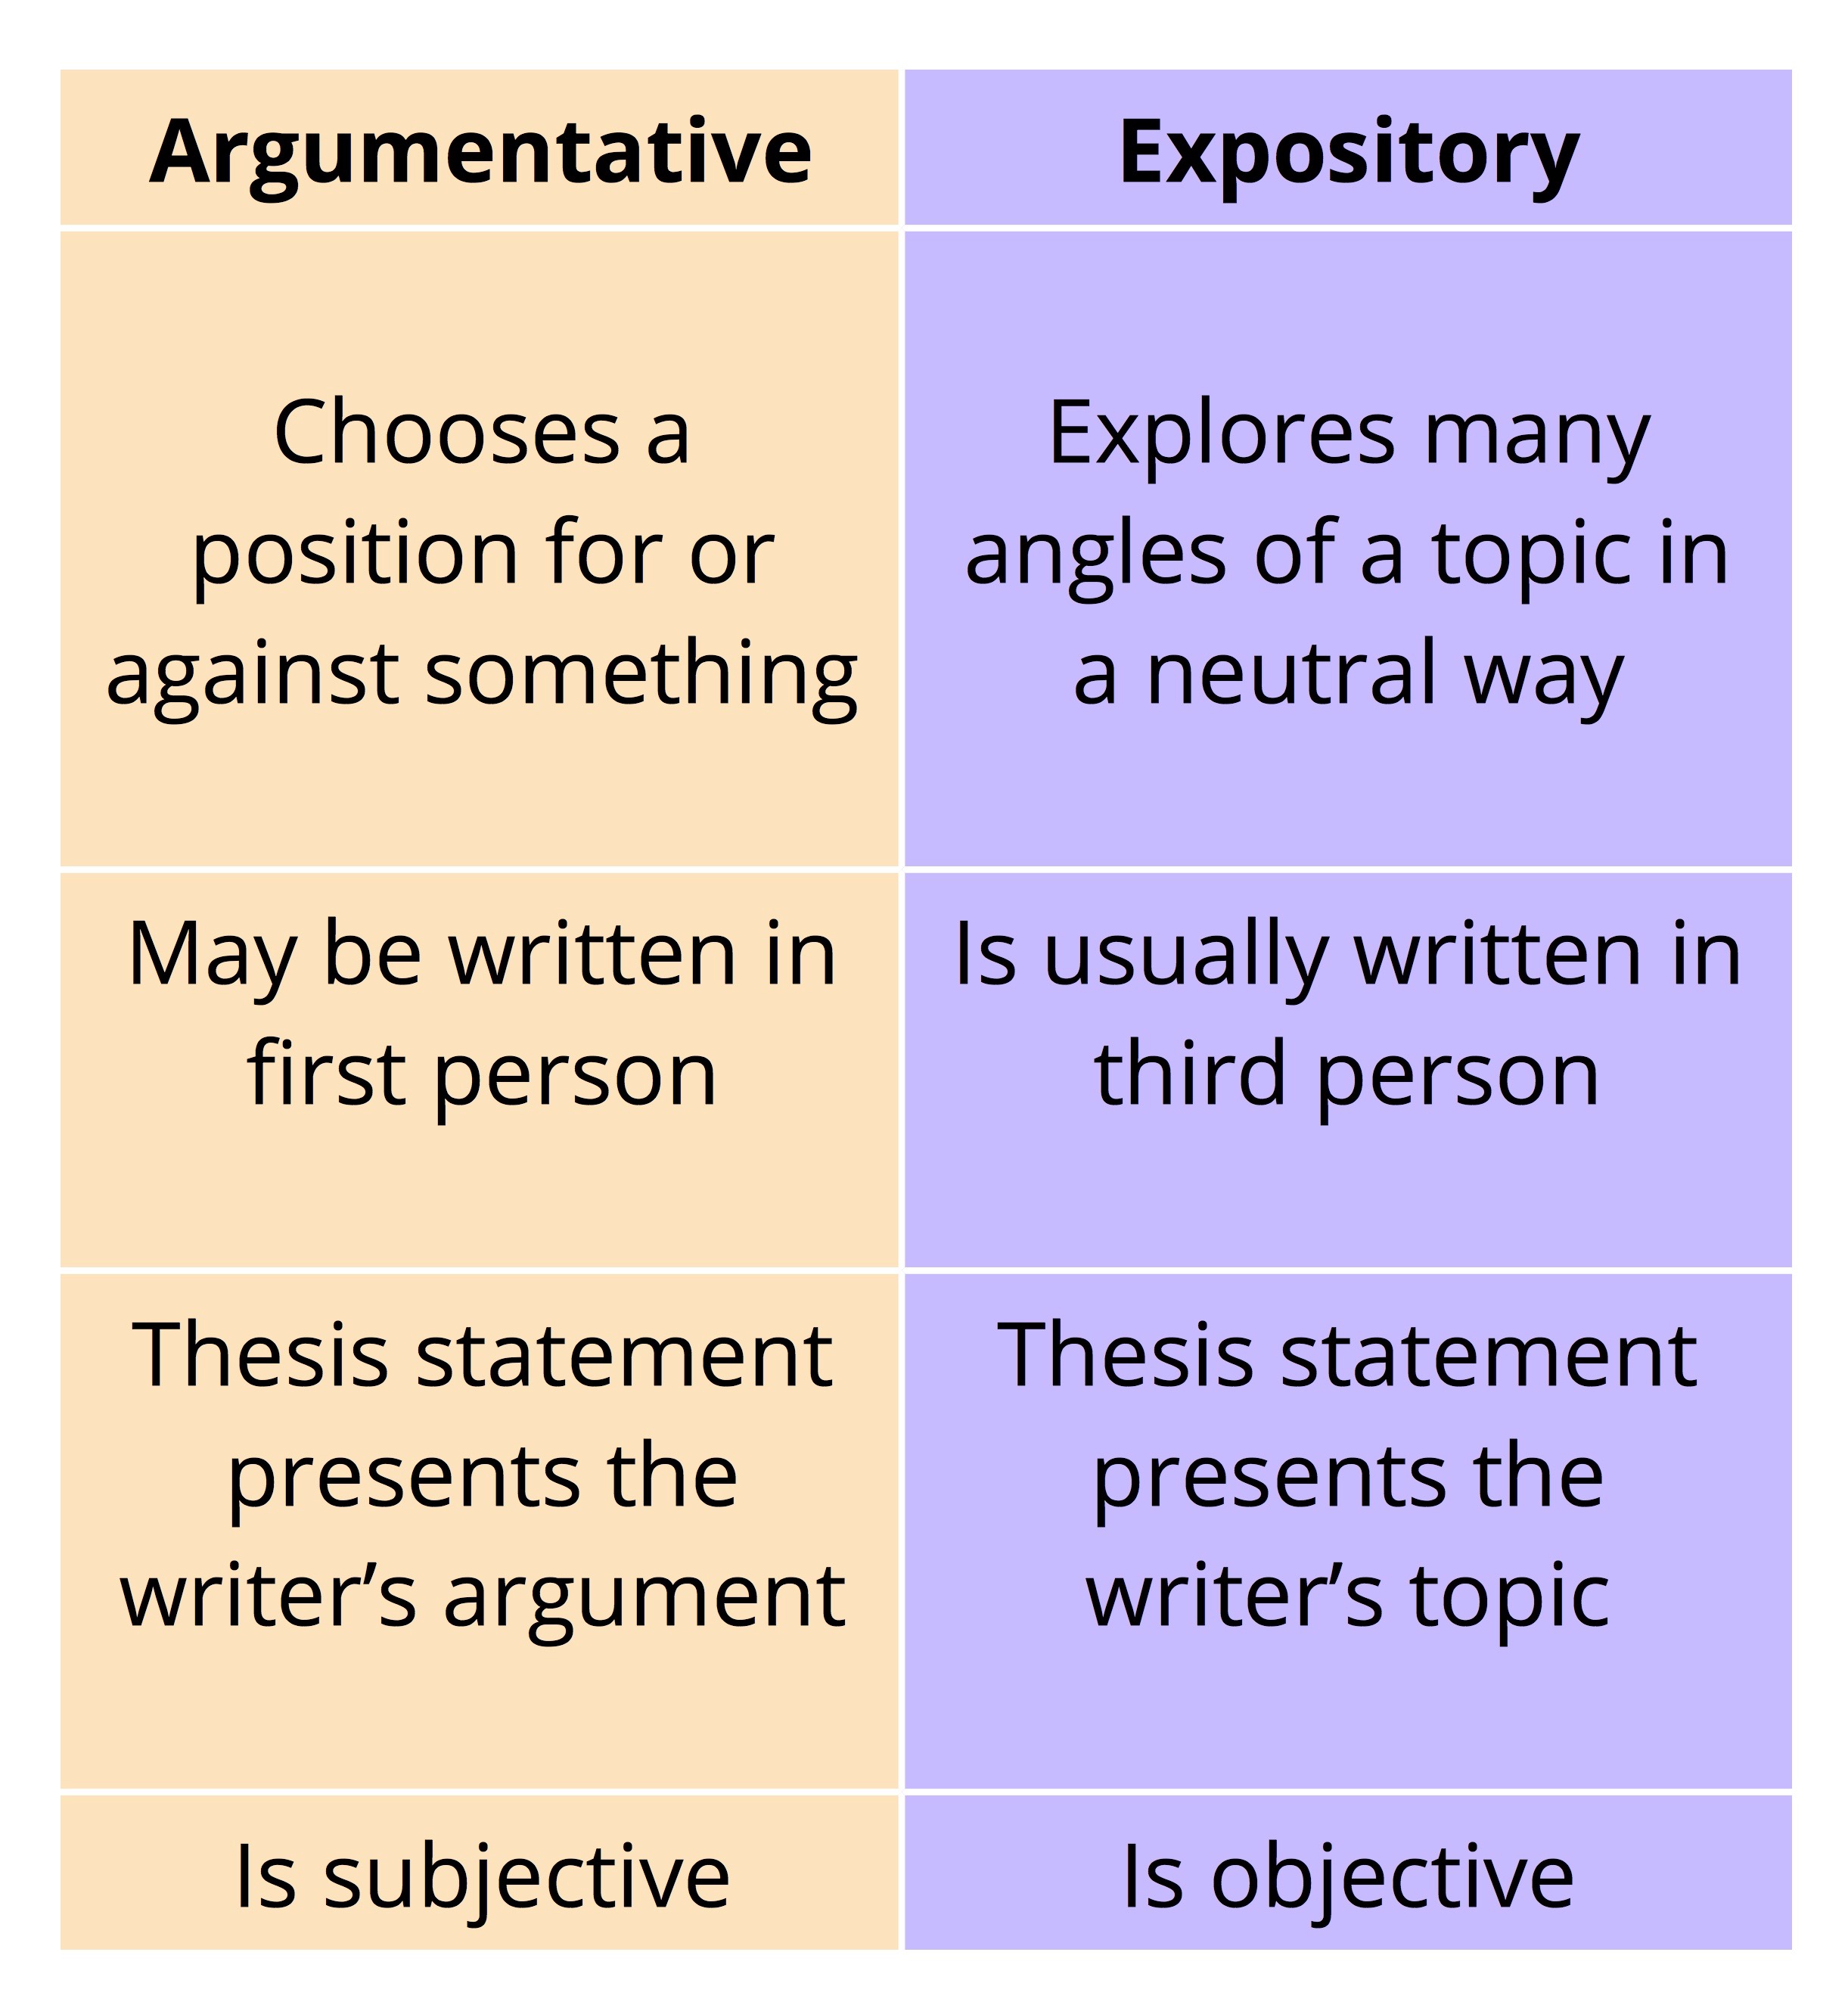 expository essay vs argumentative